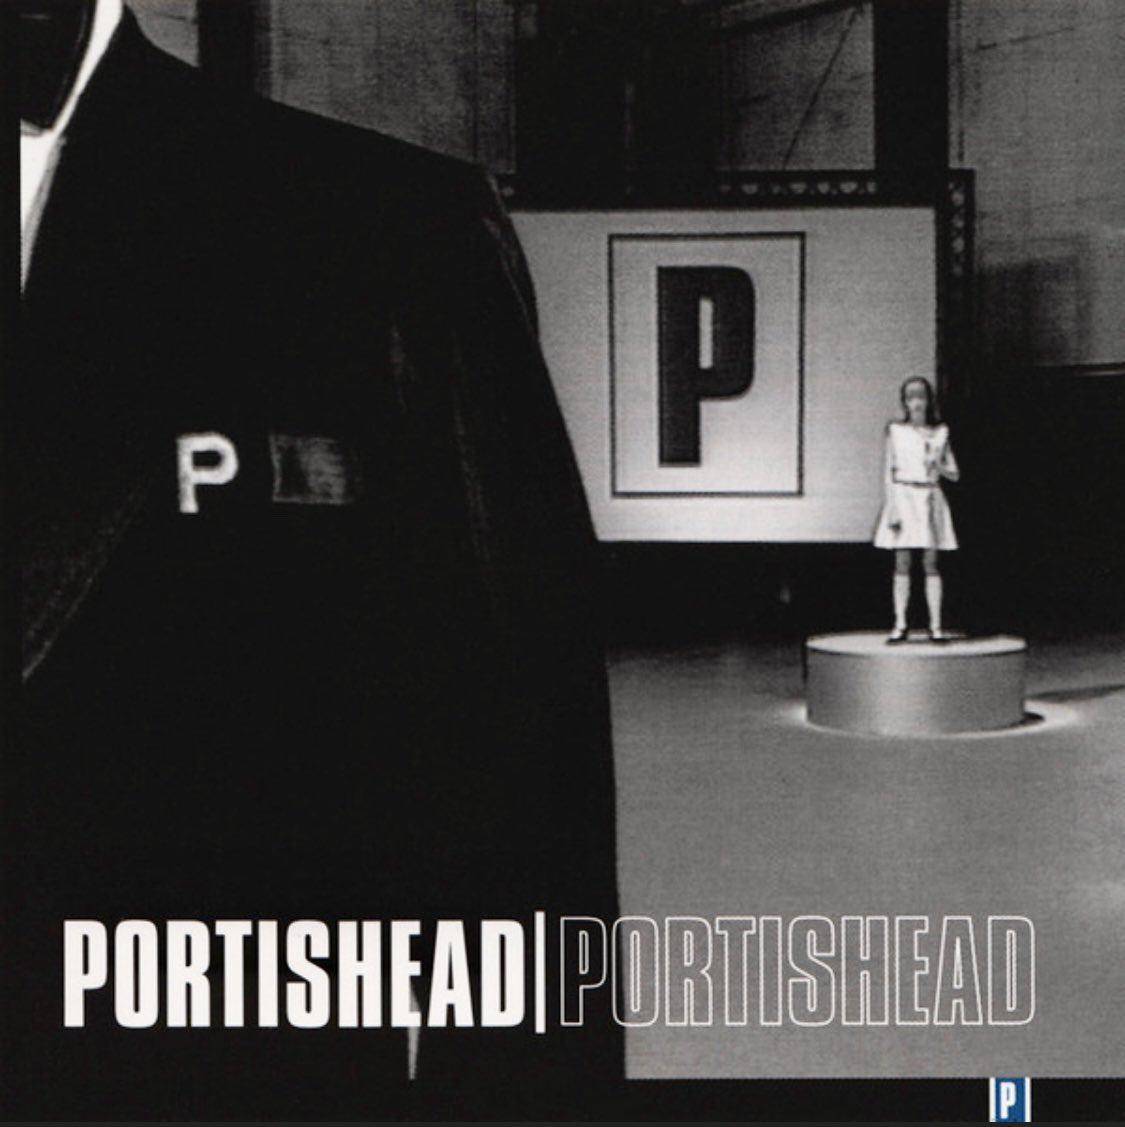 Portishead - Portishead, this mornings  CD 💿